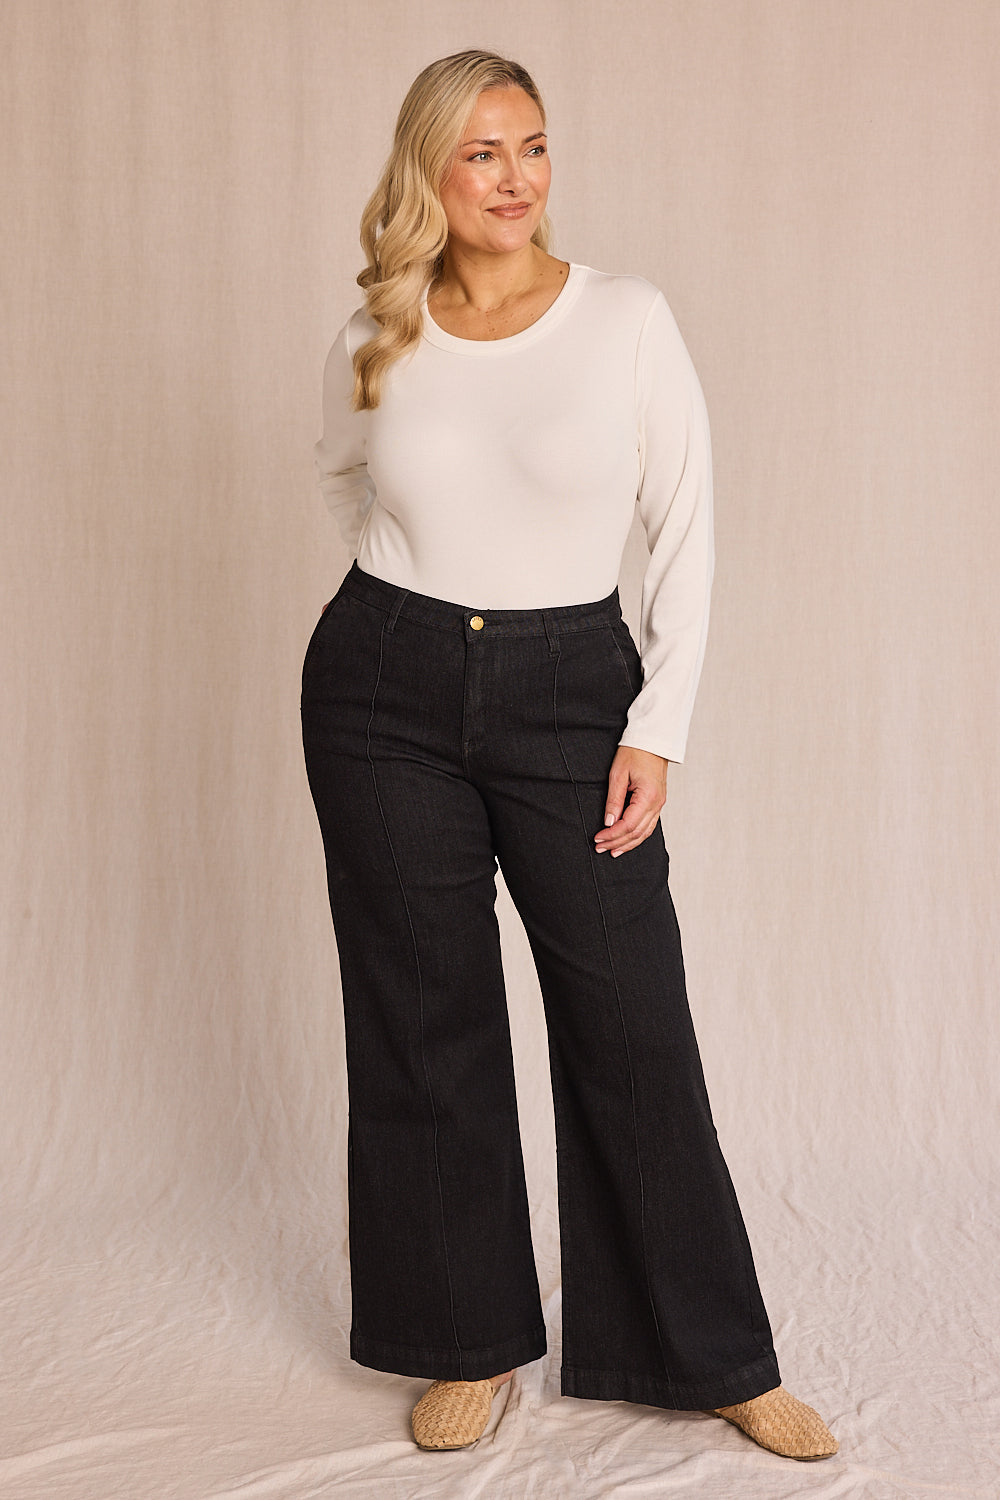 SBYOJLPB Fashion Women Plus Size Solid Button Zipper Casual Pants  Calf-Length Trousers White 10(XL)